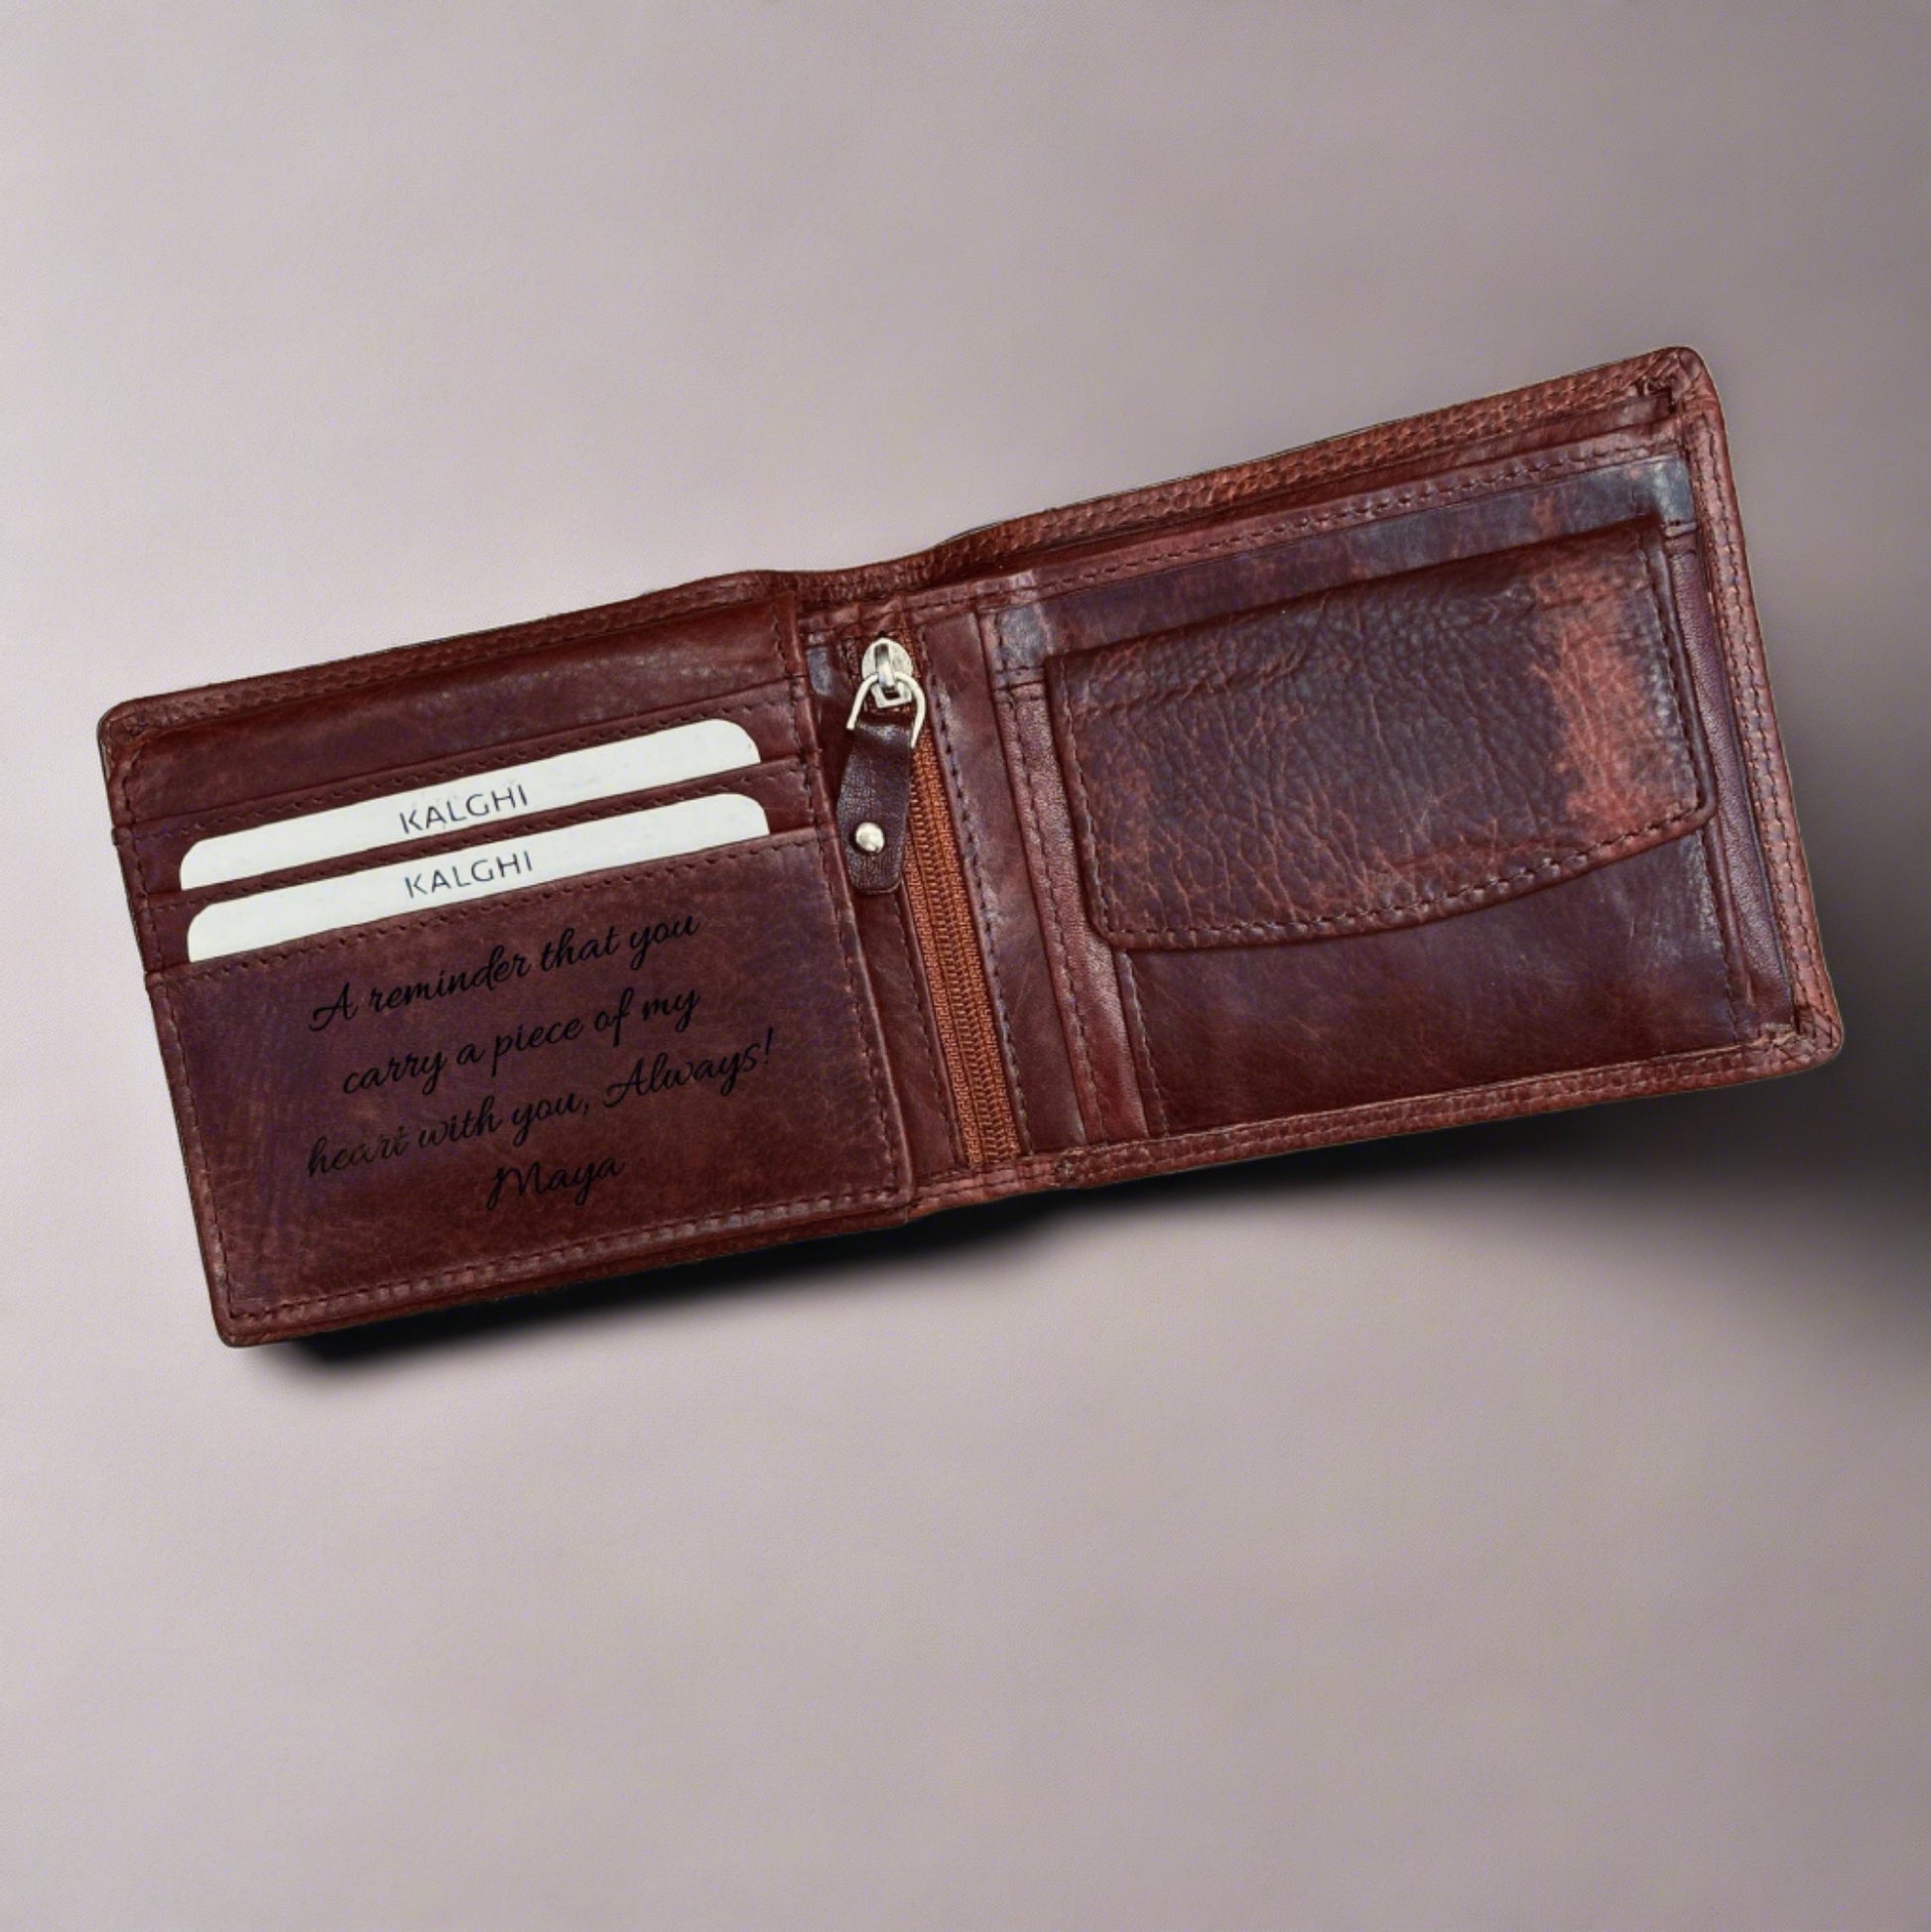 Kevin Men's Brown Leather Wallet, Personalised - KALGHI - KALGHI LEATHER